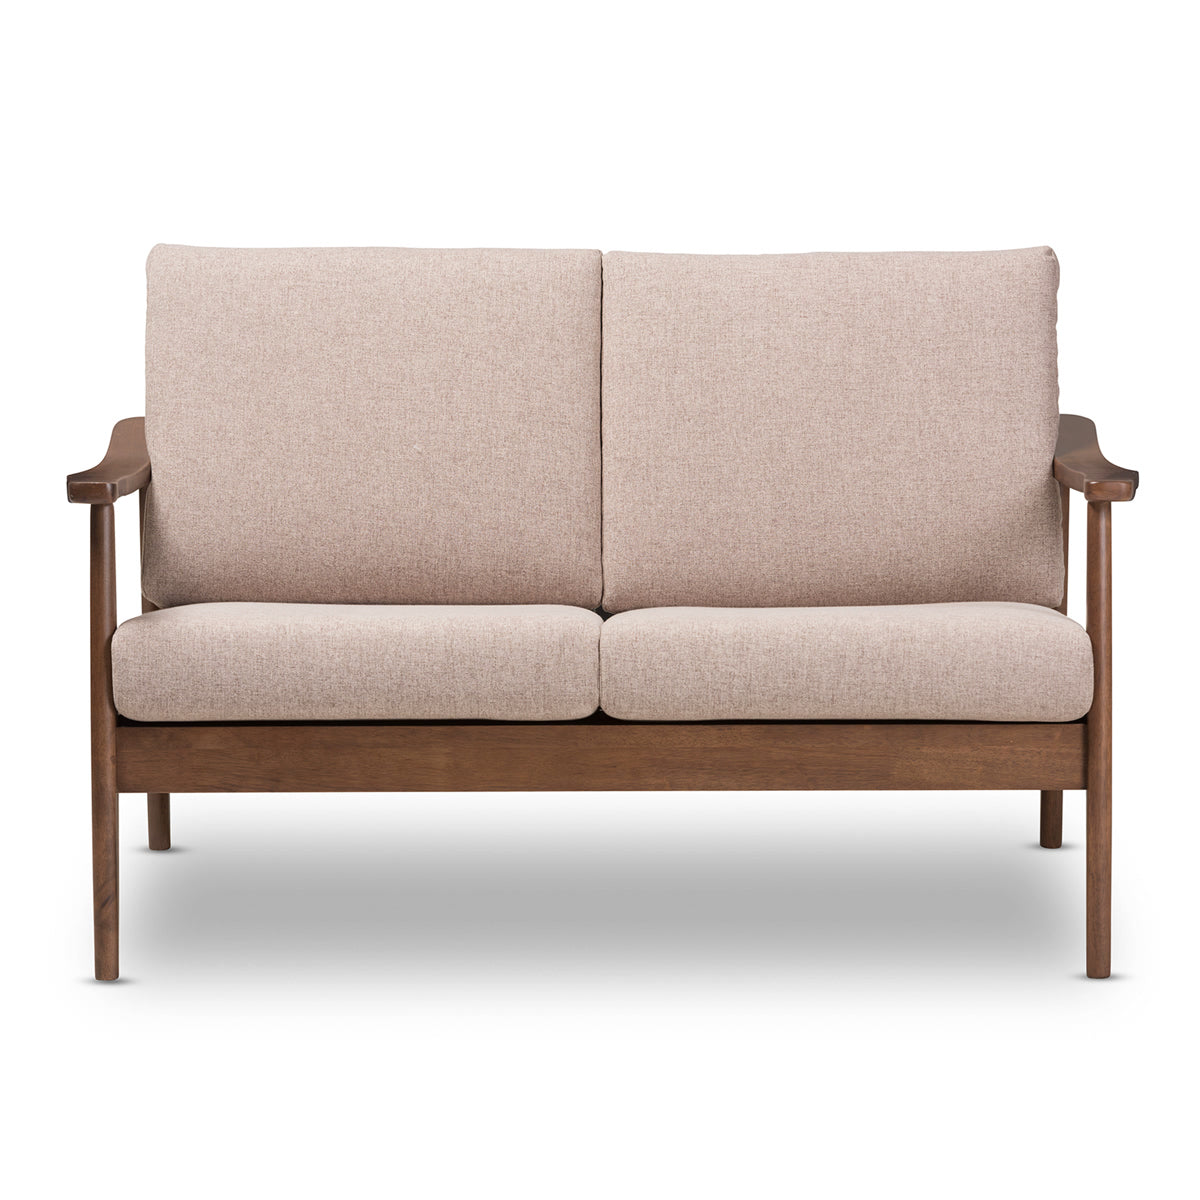 Baxton Studio Venza Mid-Century Modern Walnut Wood Light Brown Fabric Upholstered 2-Seater Loveseat Baxton Studio-sofas-Minimal And Modern - 3